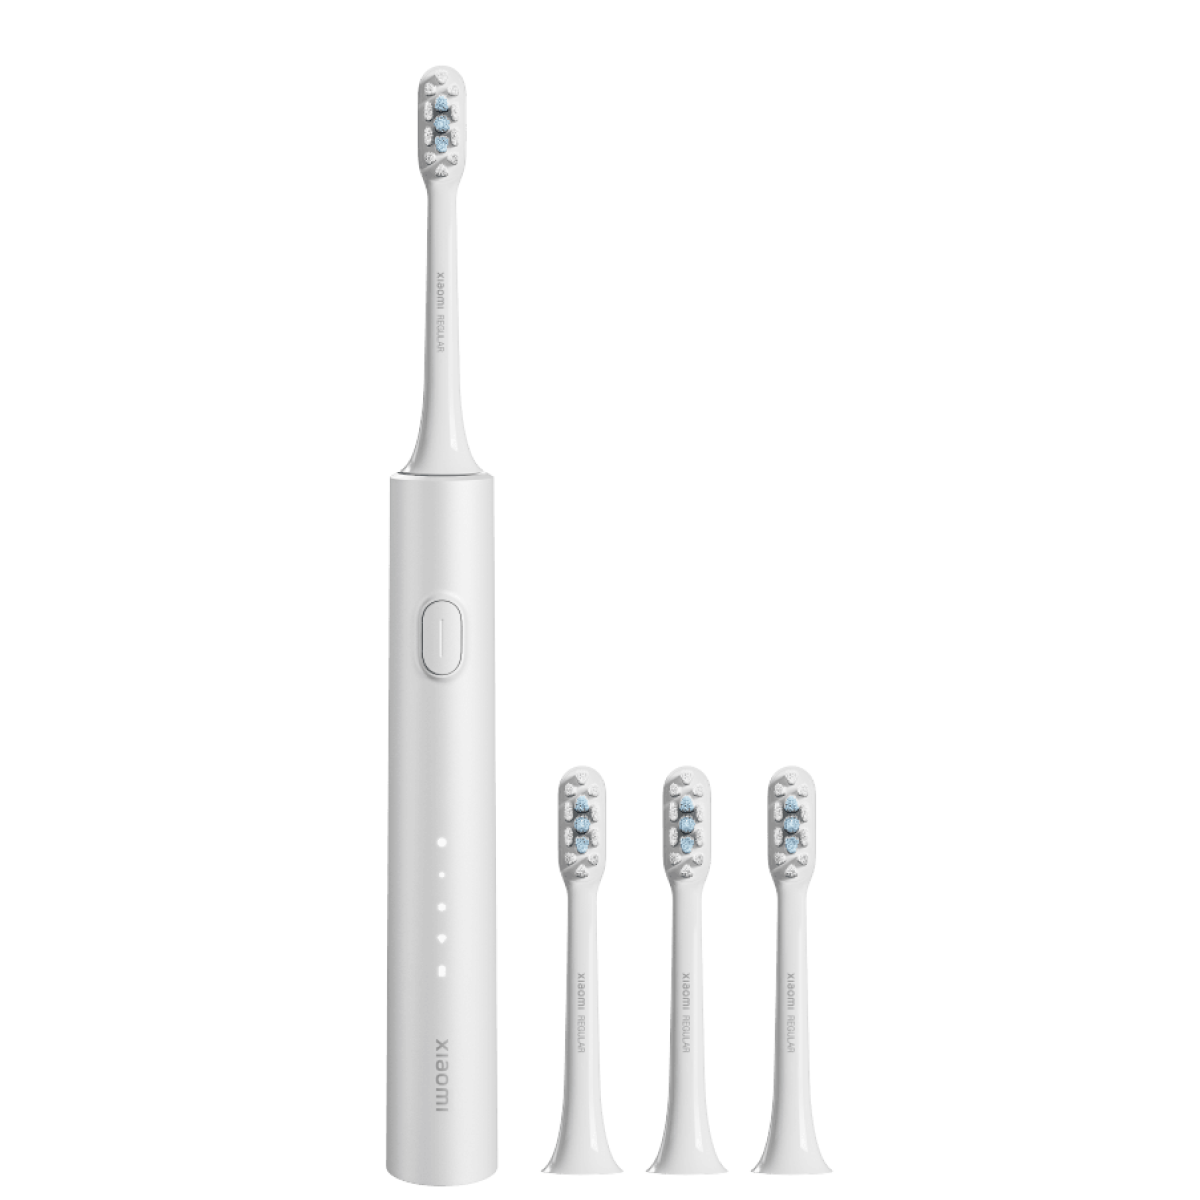 Электрическая зубная щетка Xiaomi Electric Toothbrush T302 серебристая электрическая зубная щетка xiaomi mijia sonic electric toothbrush t100 white